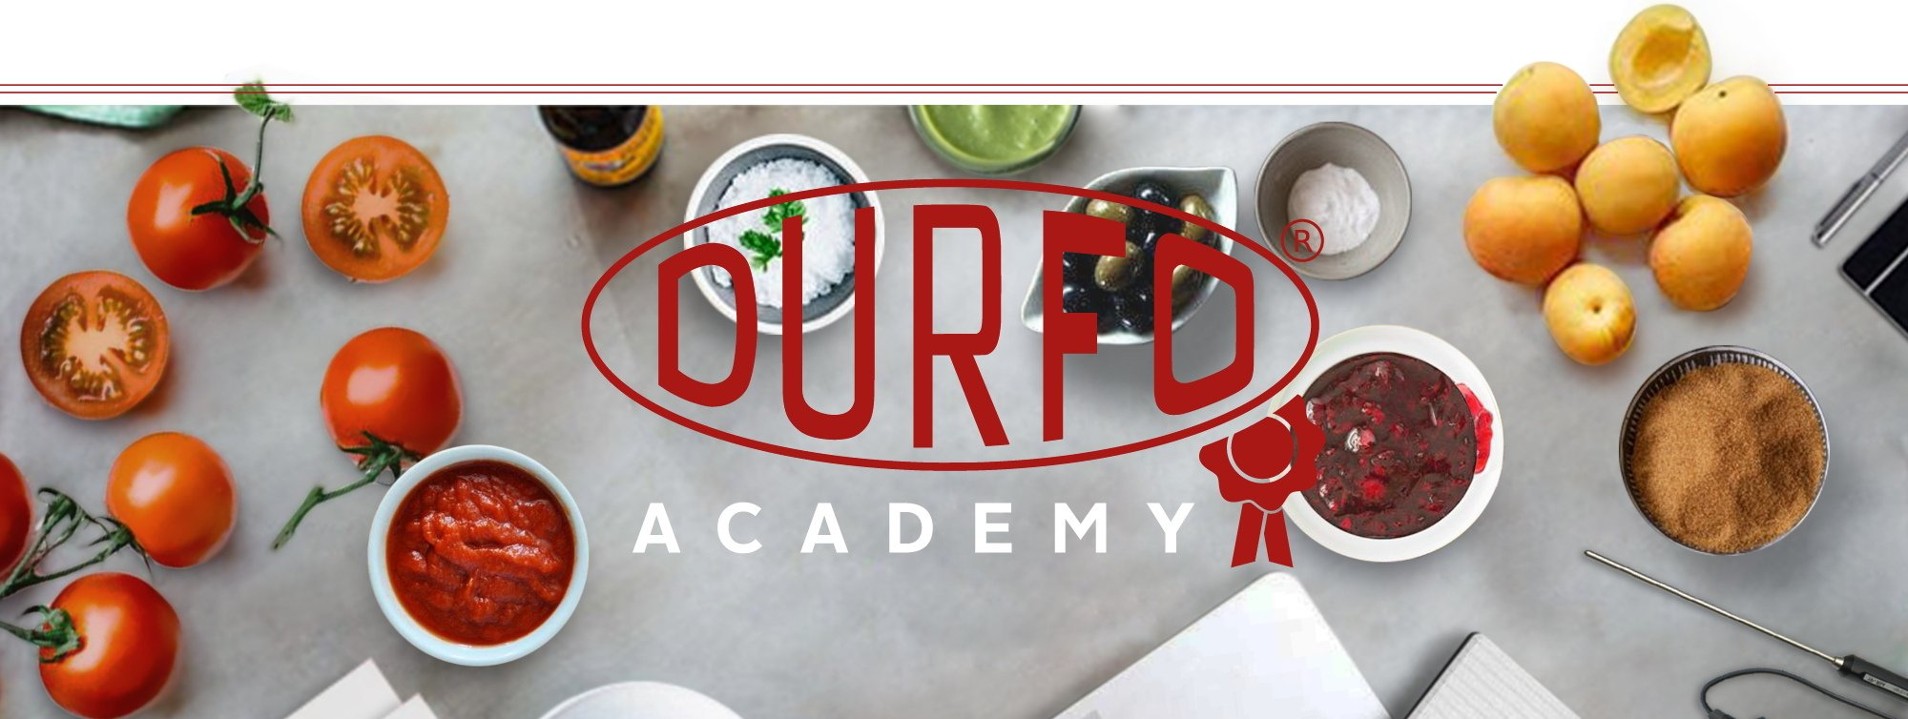 durfo academy slide